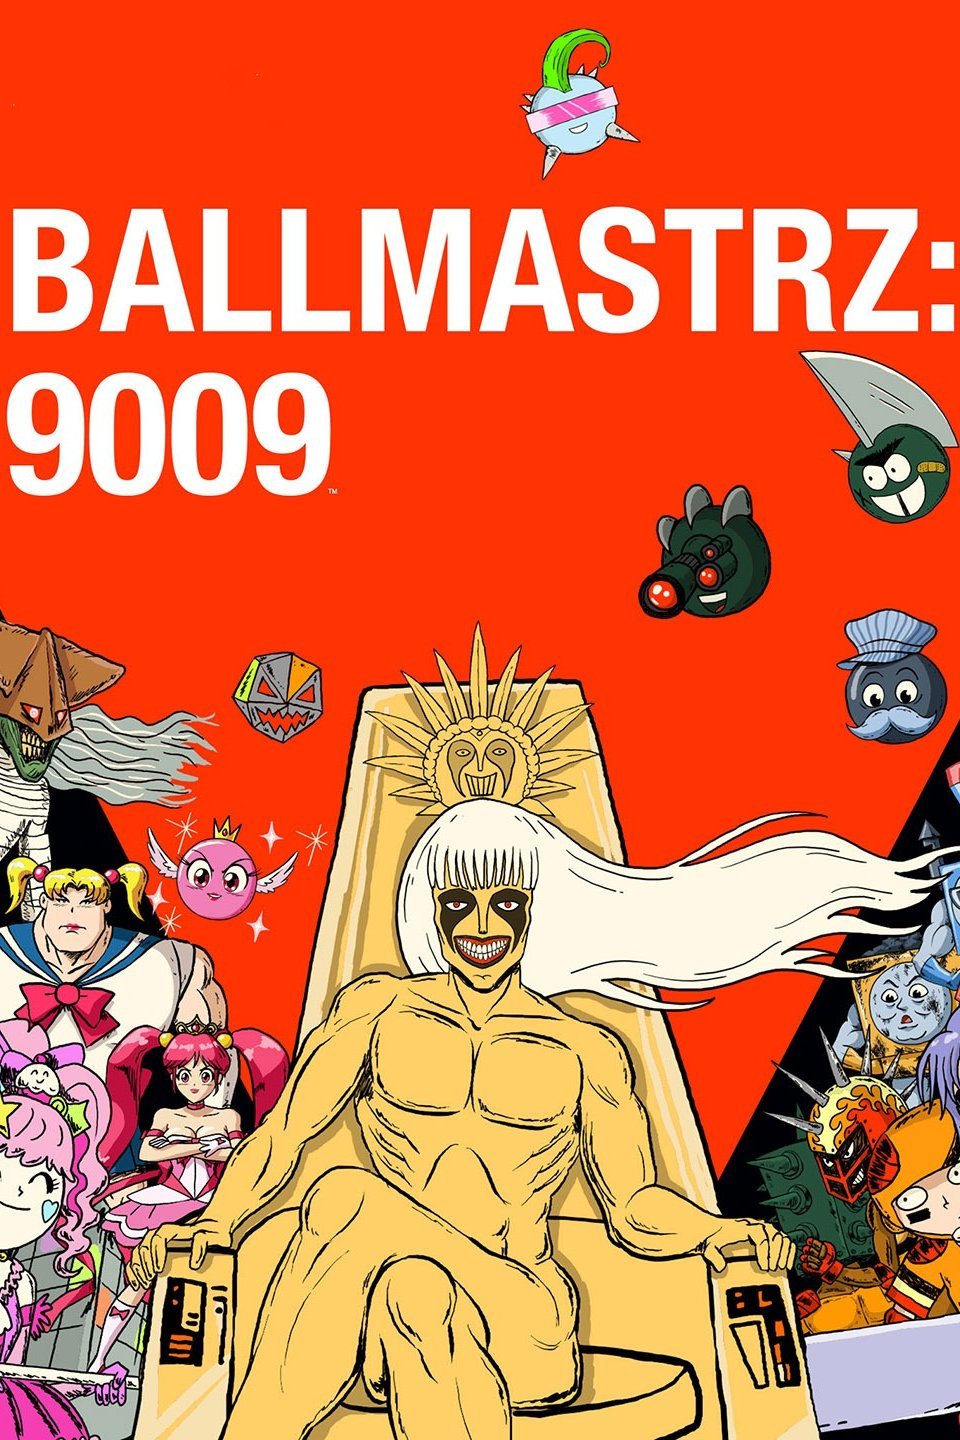 Ballmastrz: 9009 (season 1)